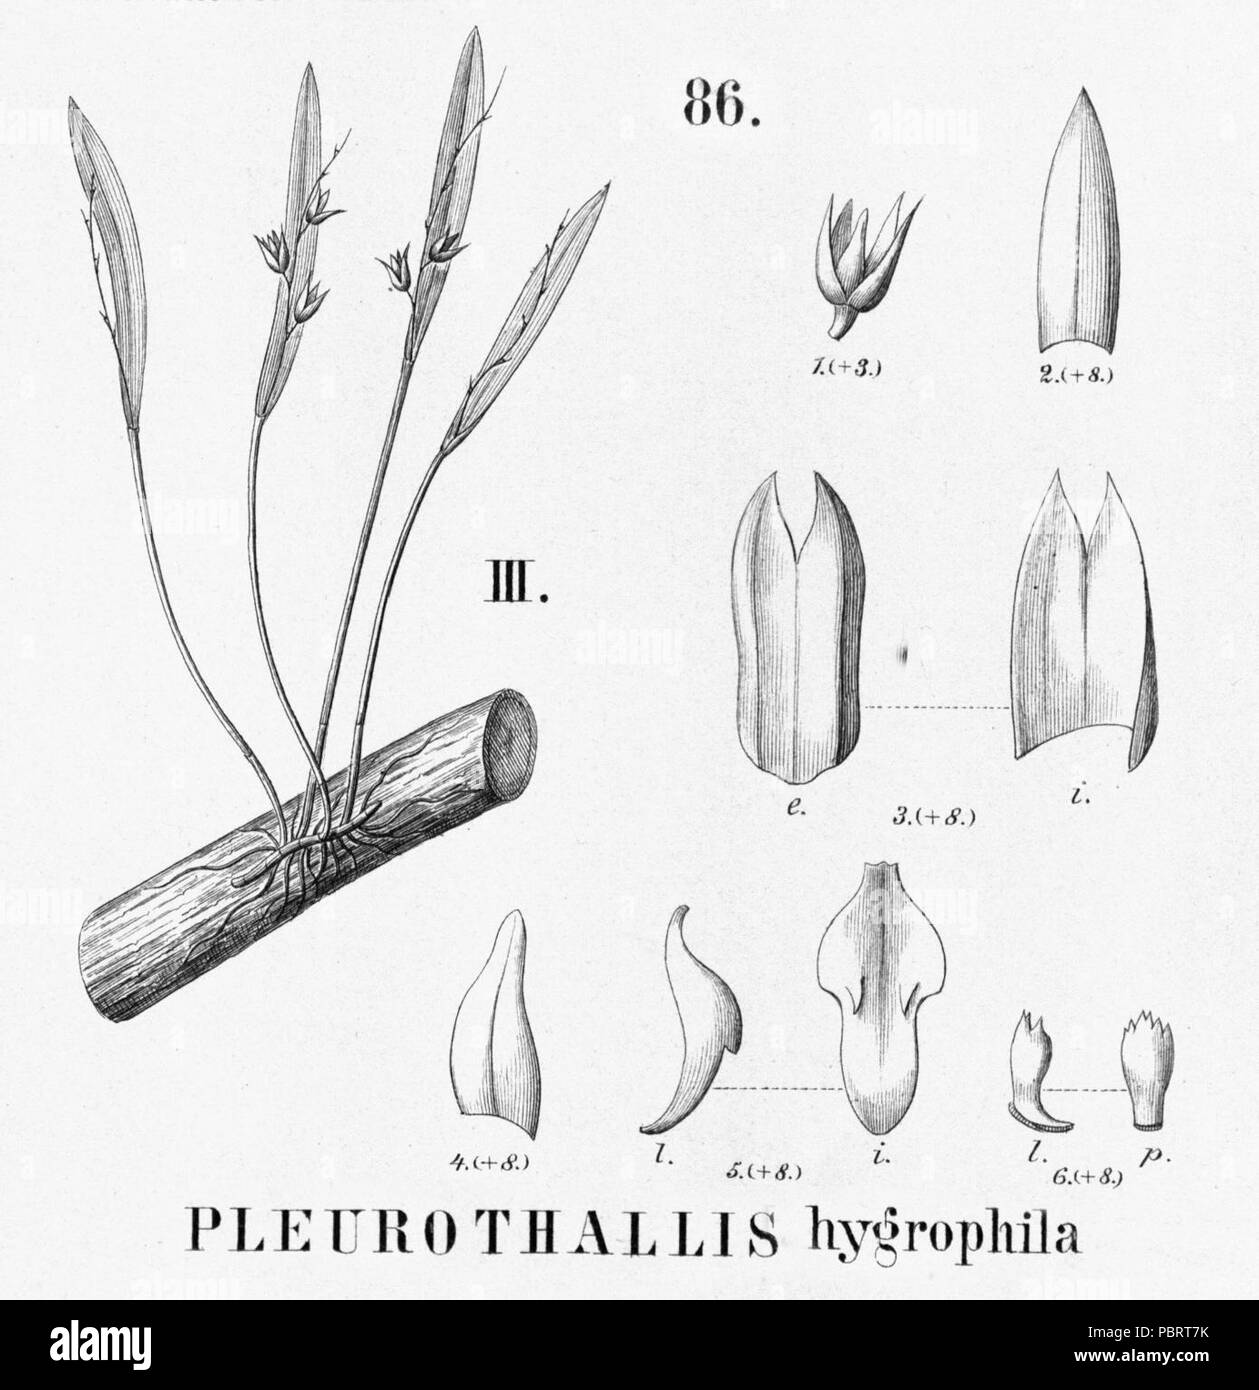 Acianthera hygrophila (as Pleurothallis hygrophila) - cutout from Flora Brasiliensis 3-4-86 fig III. Stock Photo